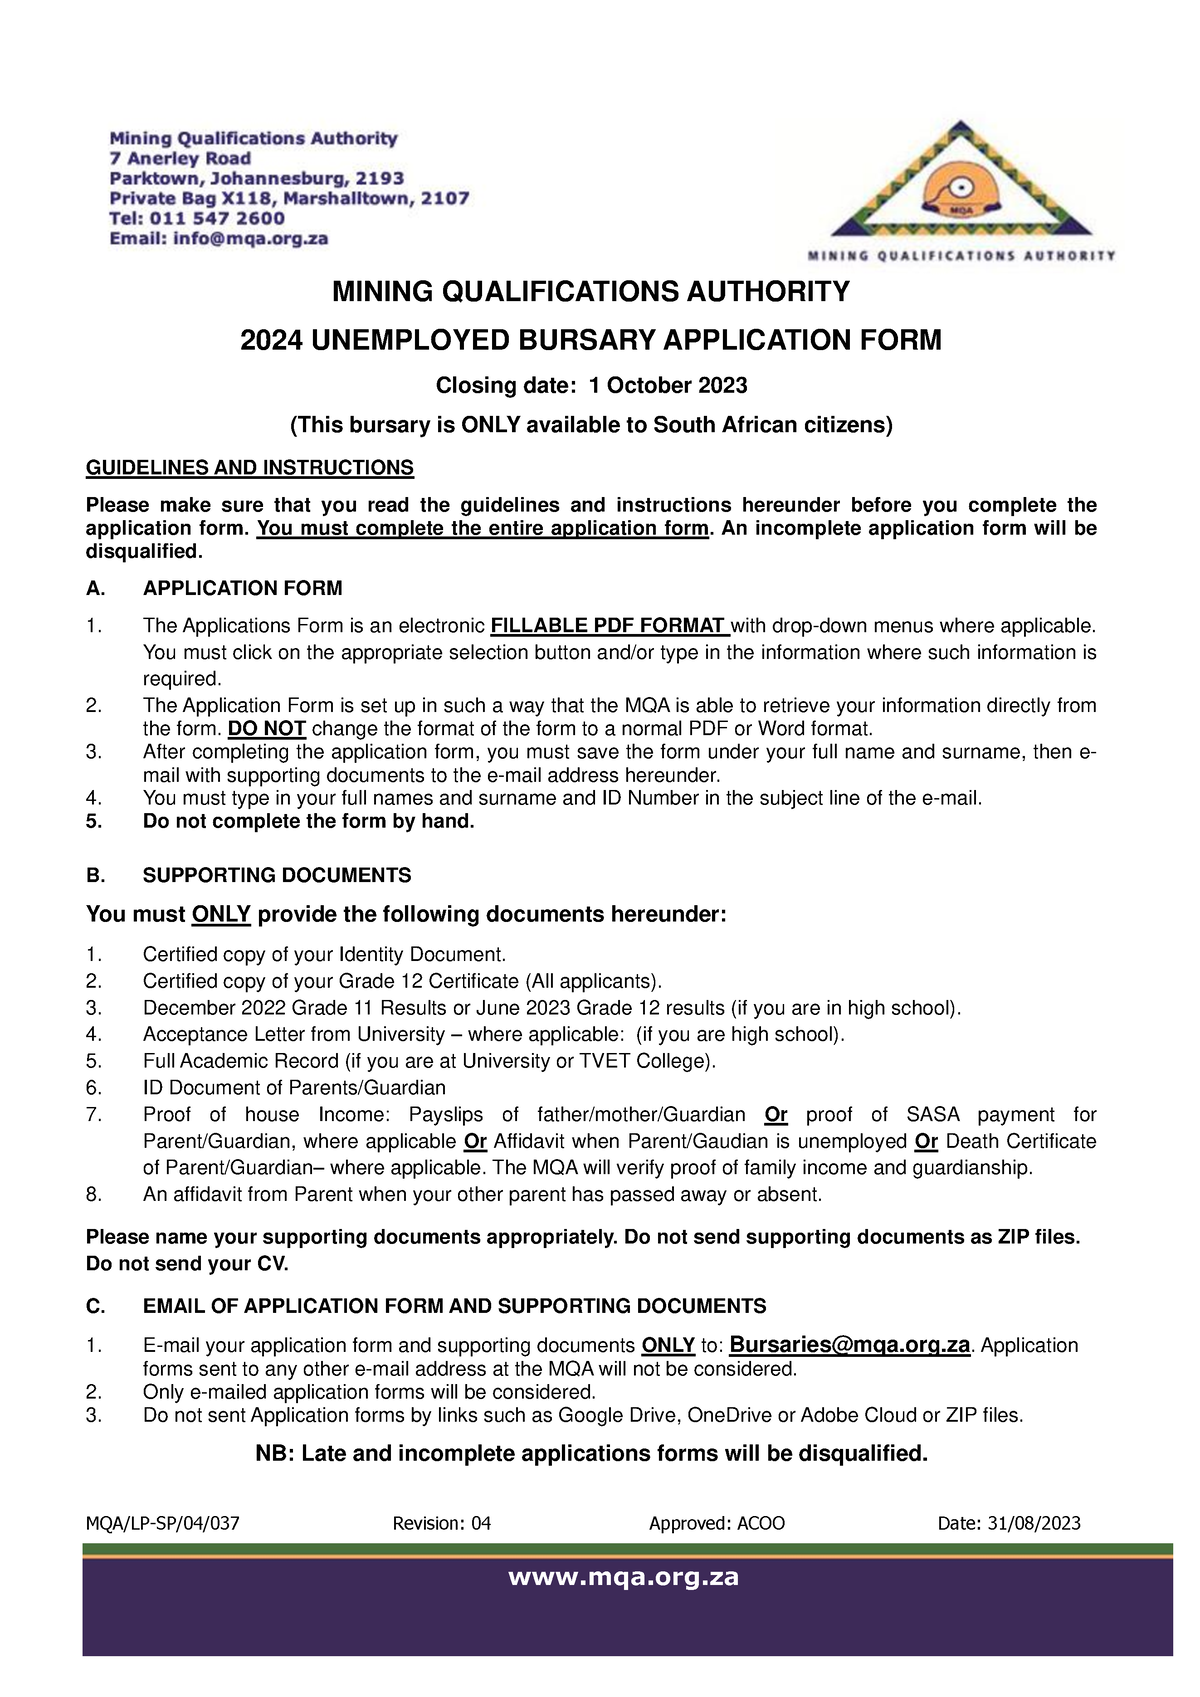 2024 Unemployed Bursary Application Form MQA/LPSP/04/037 Revision